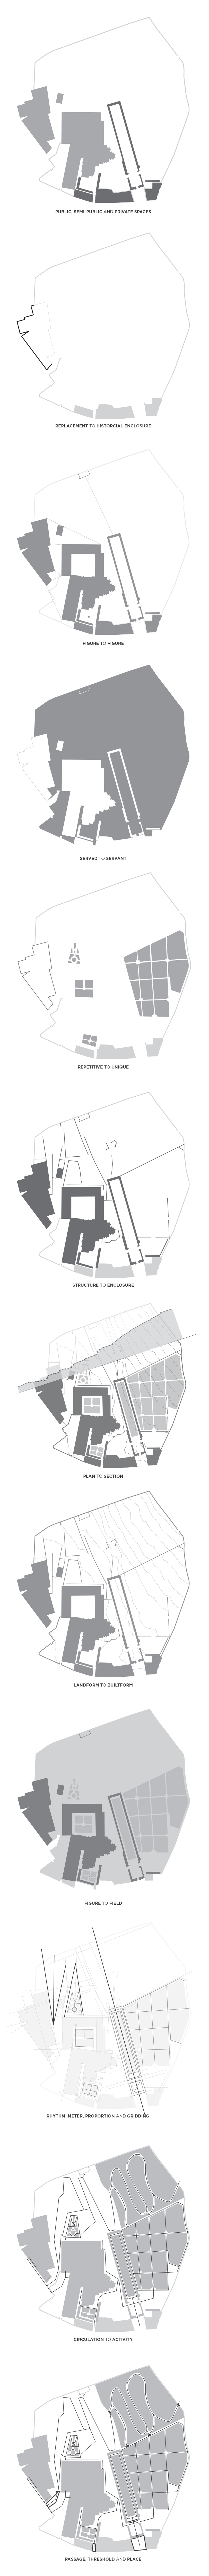 Galician-2D-Diagrams-Web